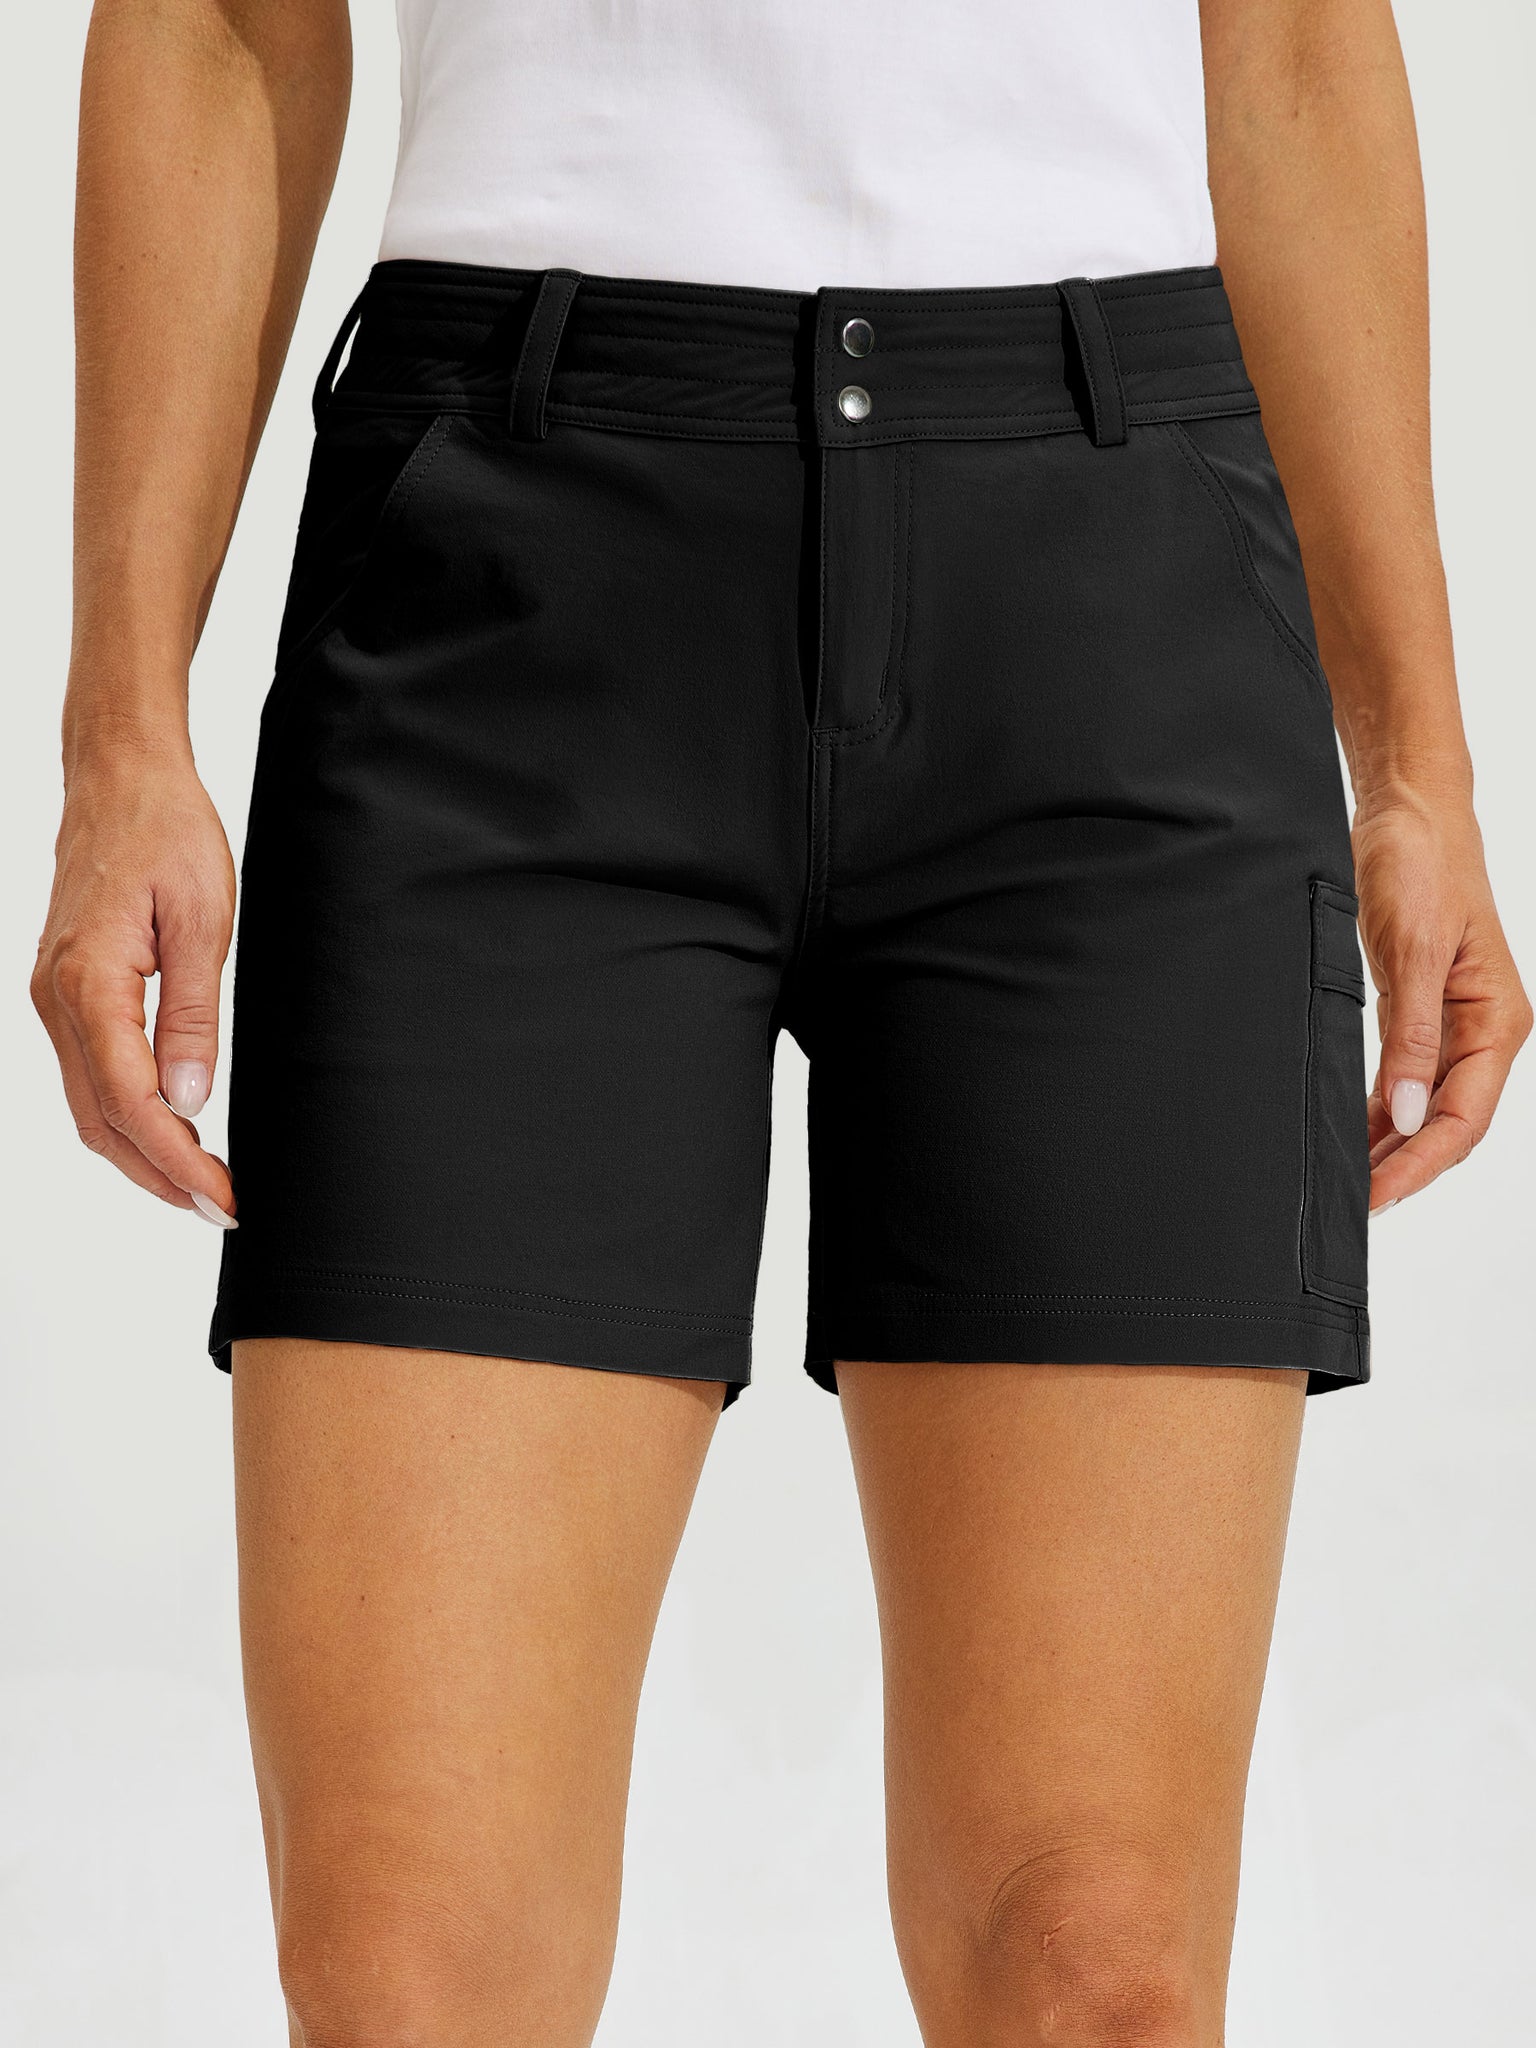 Women's Outdoor Pro Shorts 5Inch_Black3